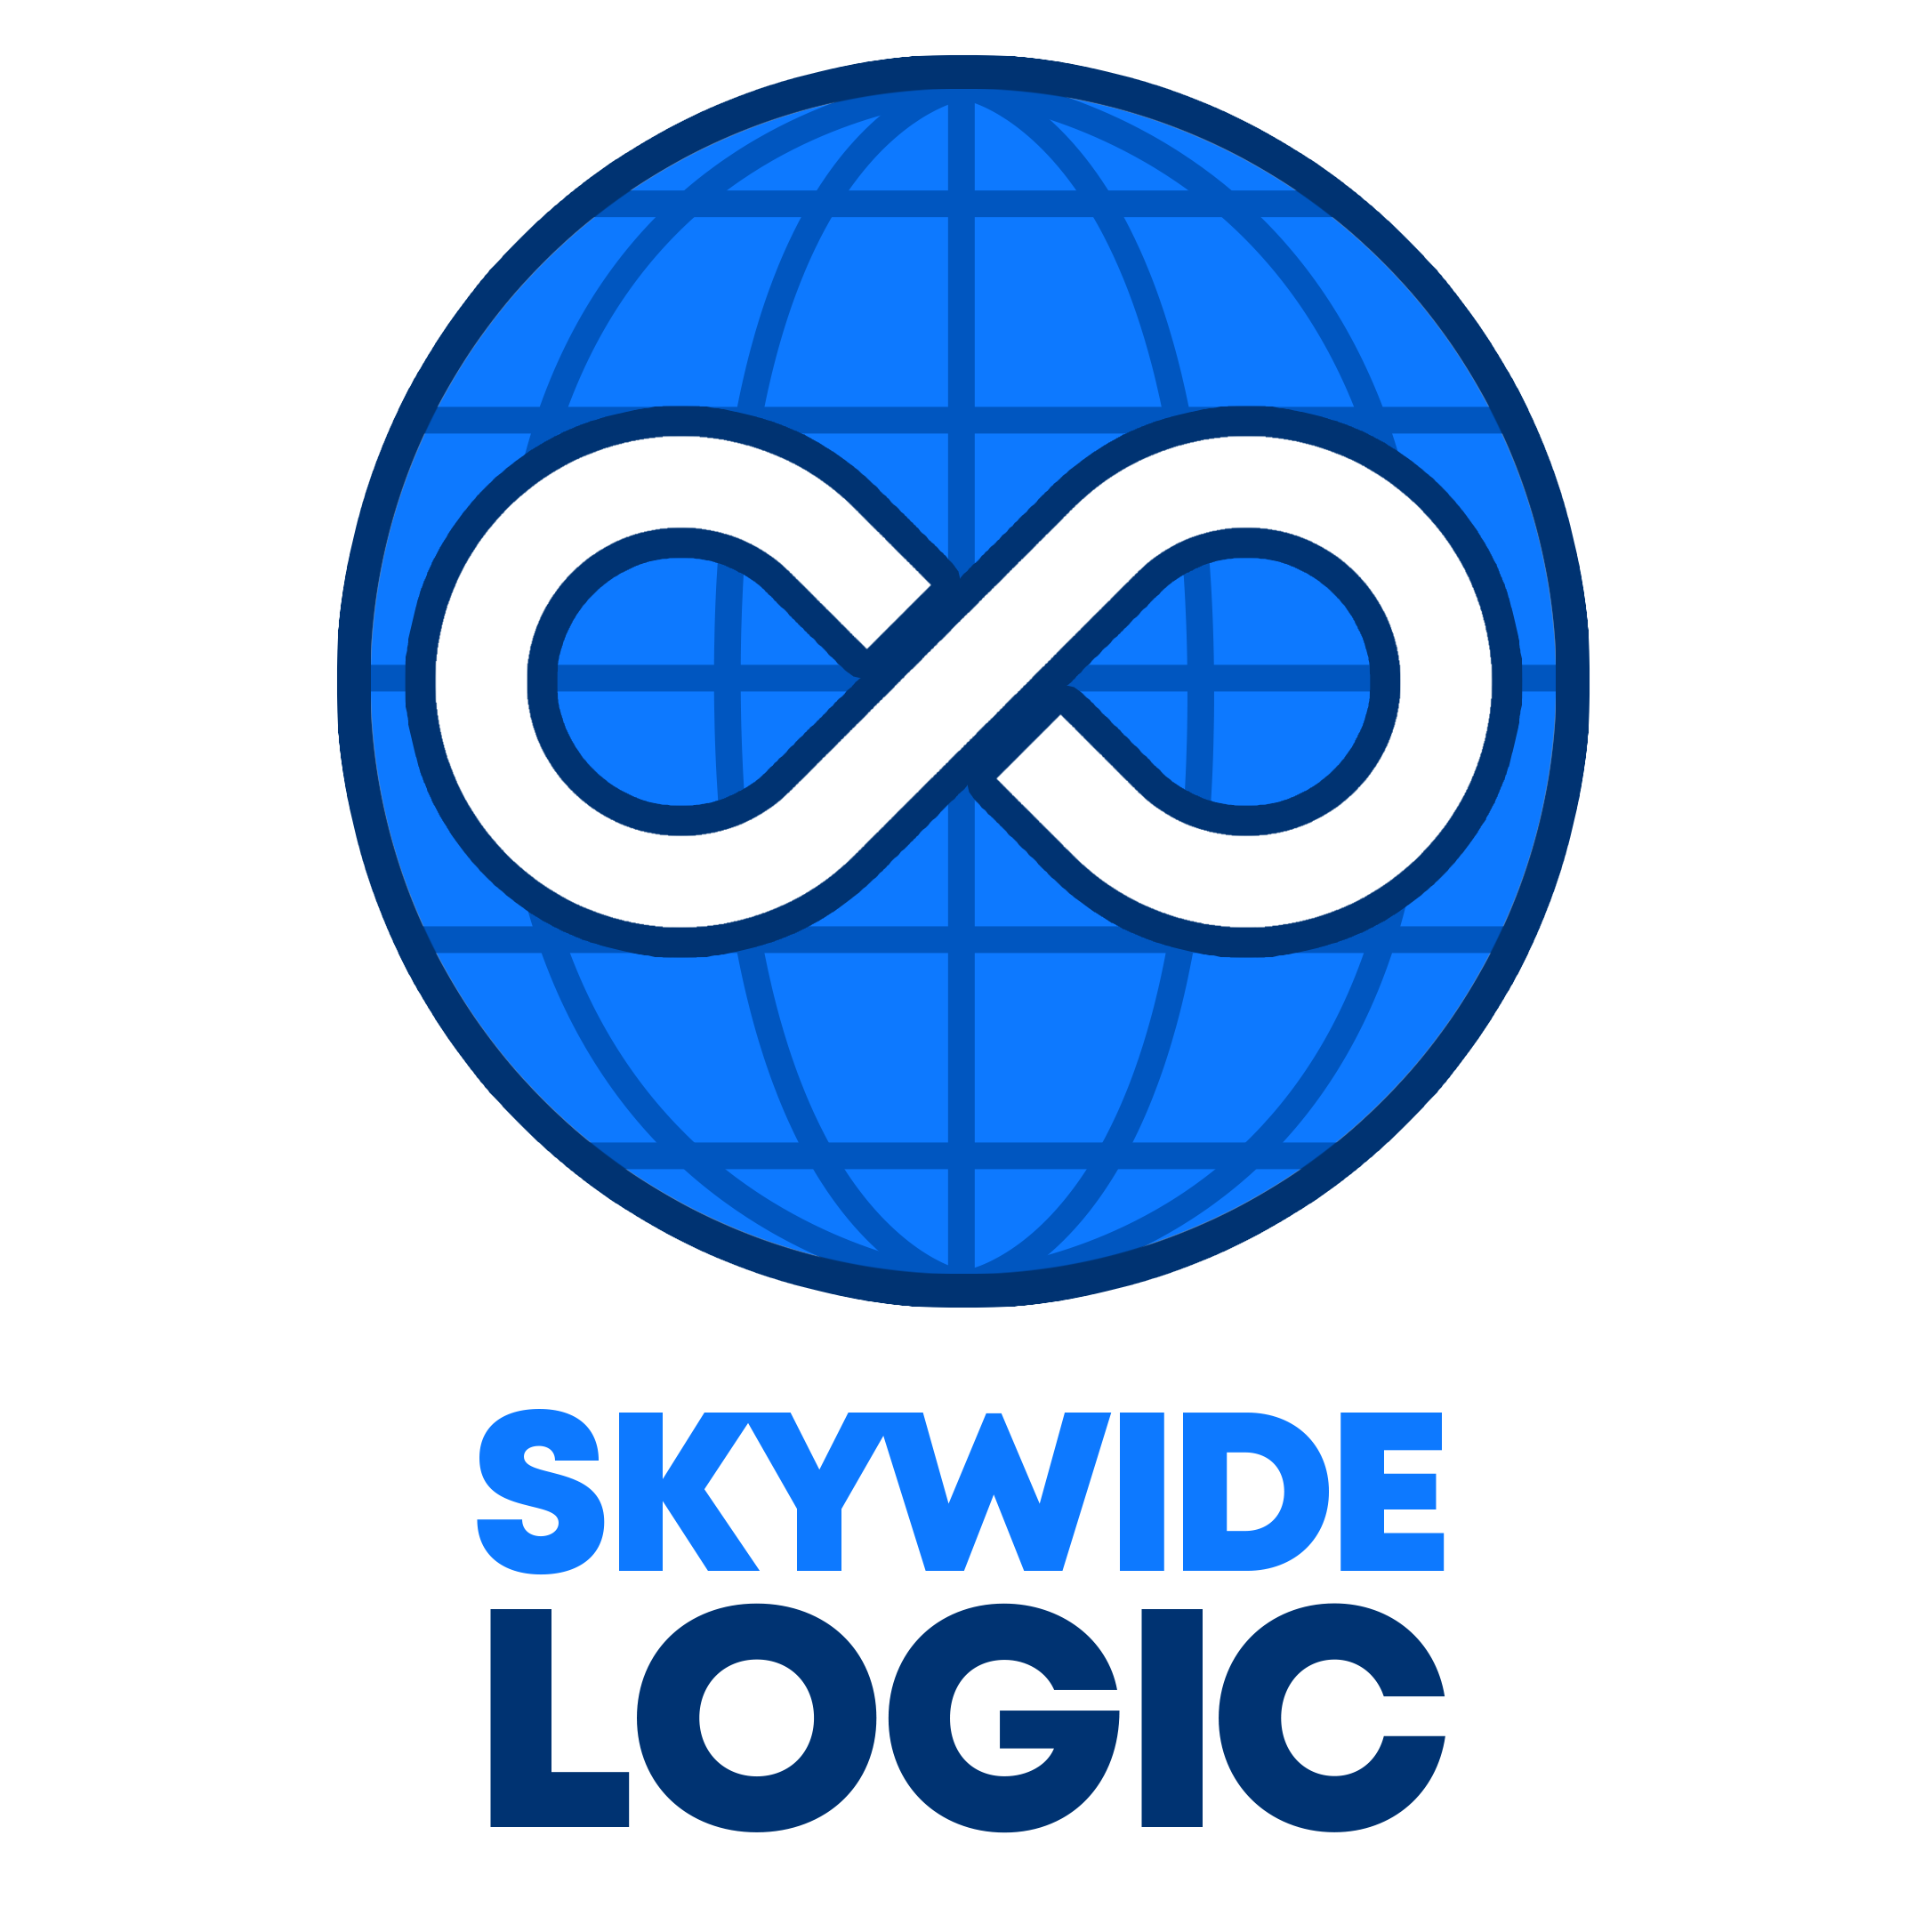 Skywide Logic